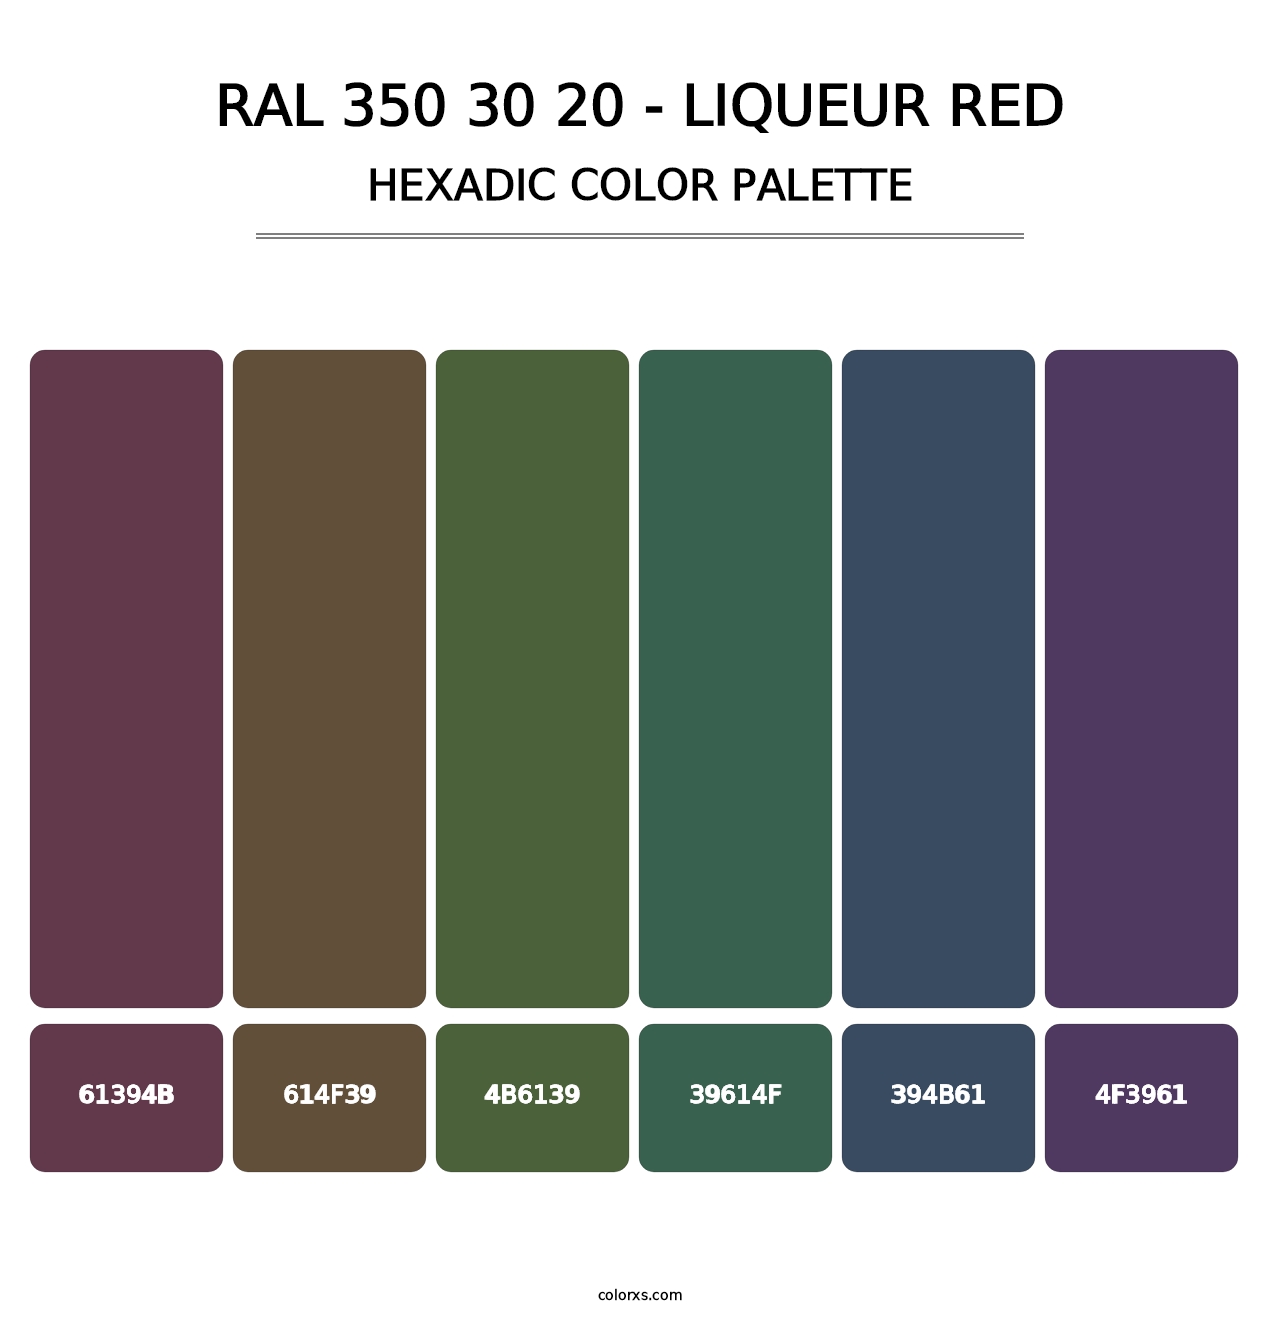 RAL 350 30 20 - Liqueur Red - Hexadic Color Palette